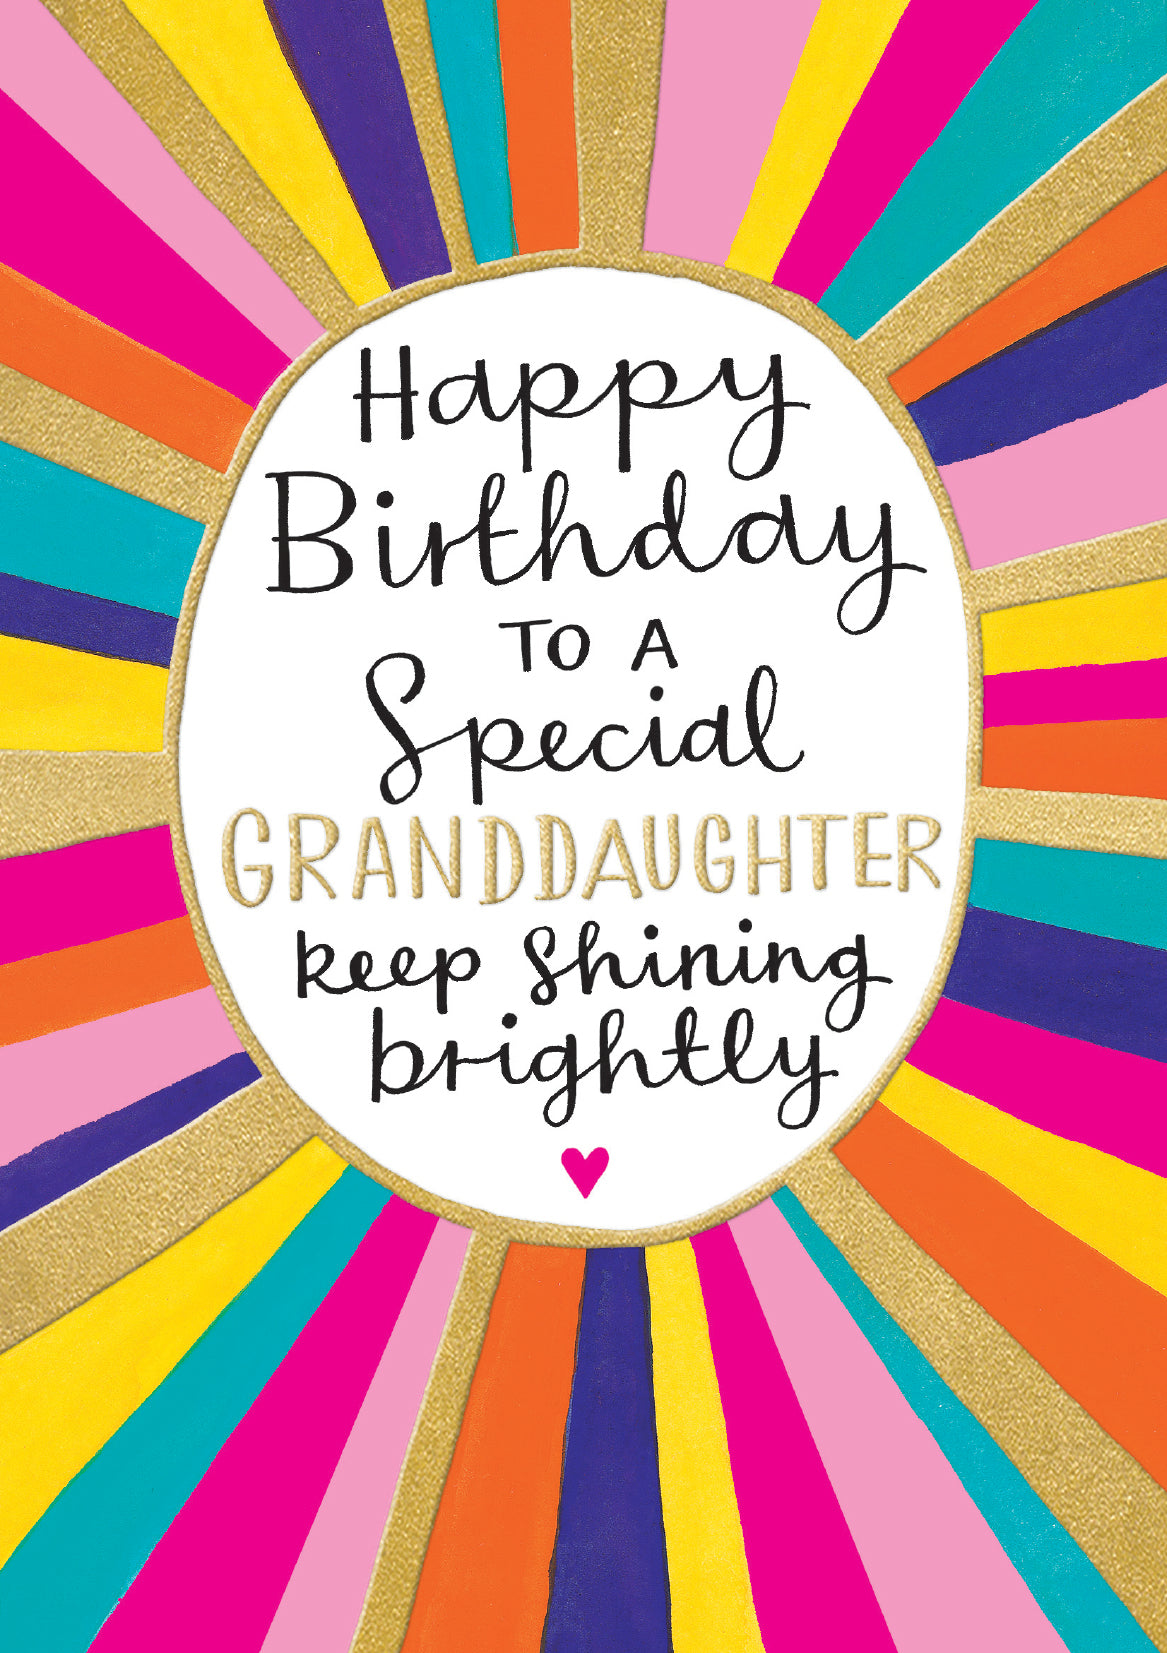 Granddaughter Shining Brightly Birthday Card from Penny Black